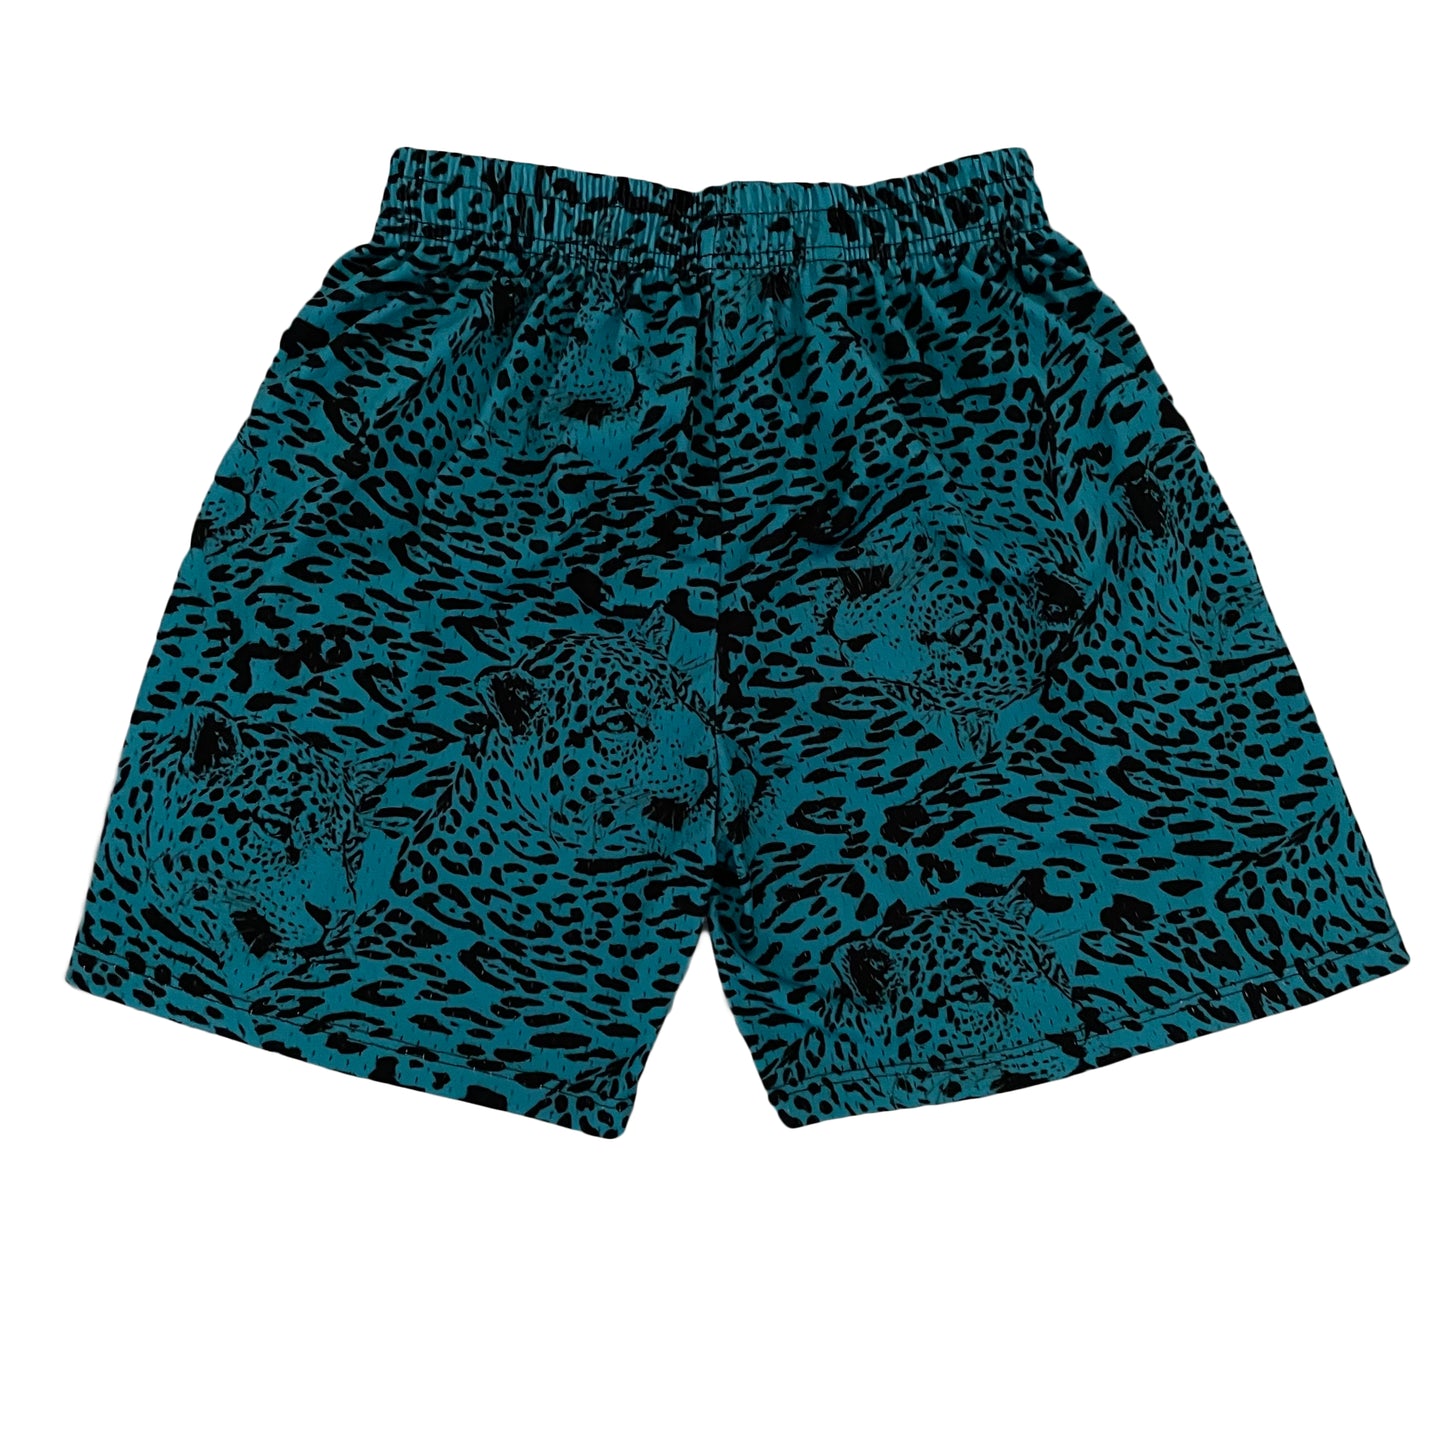 93' Jaguar Print Mesh Shorts